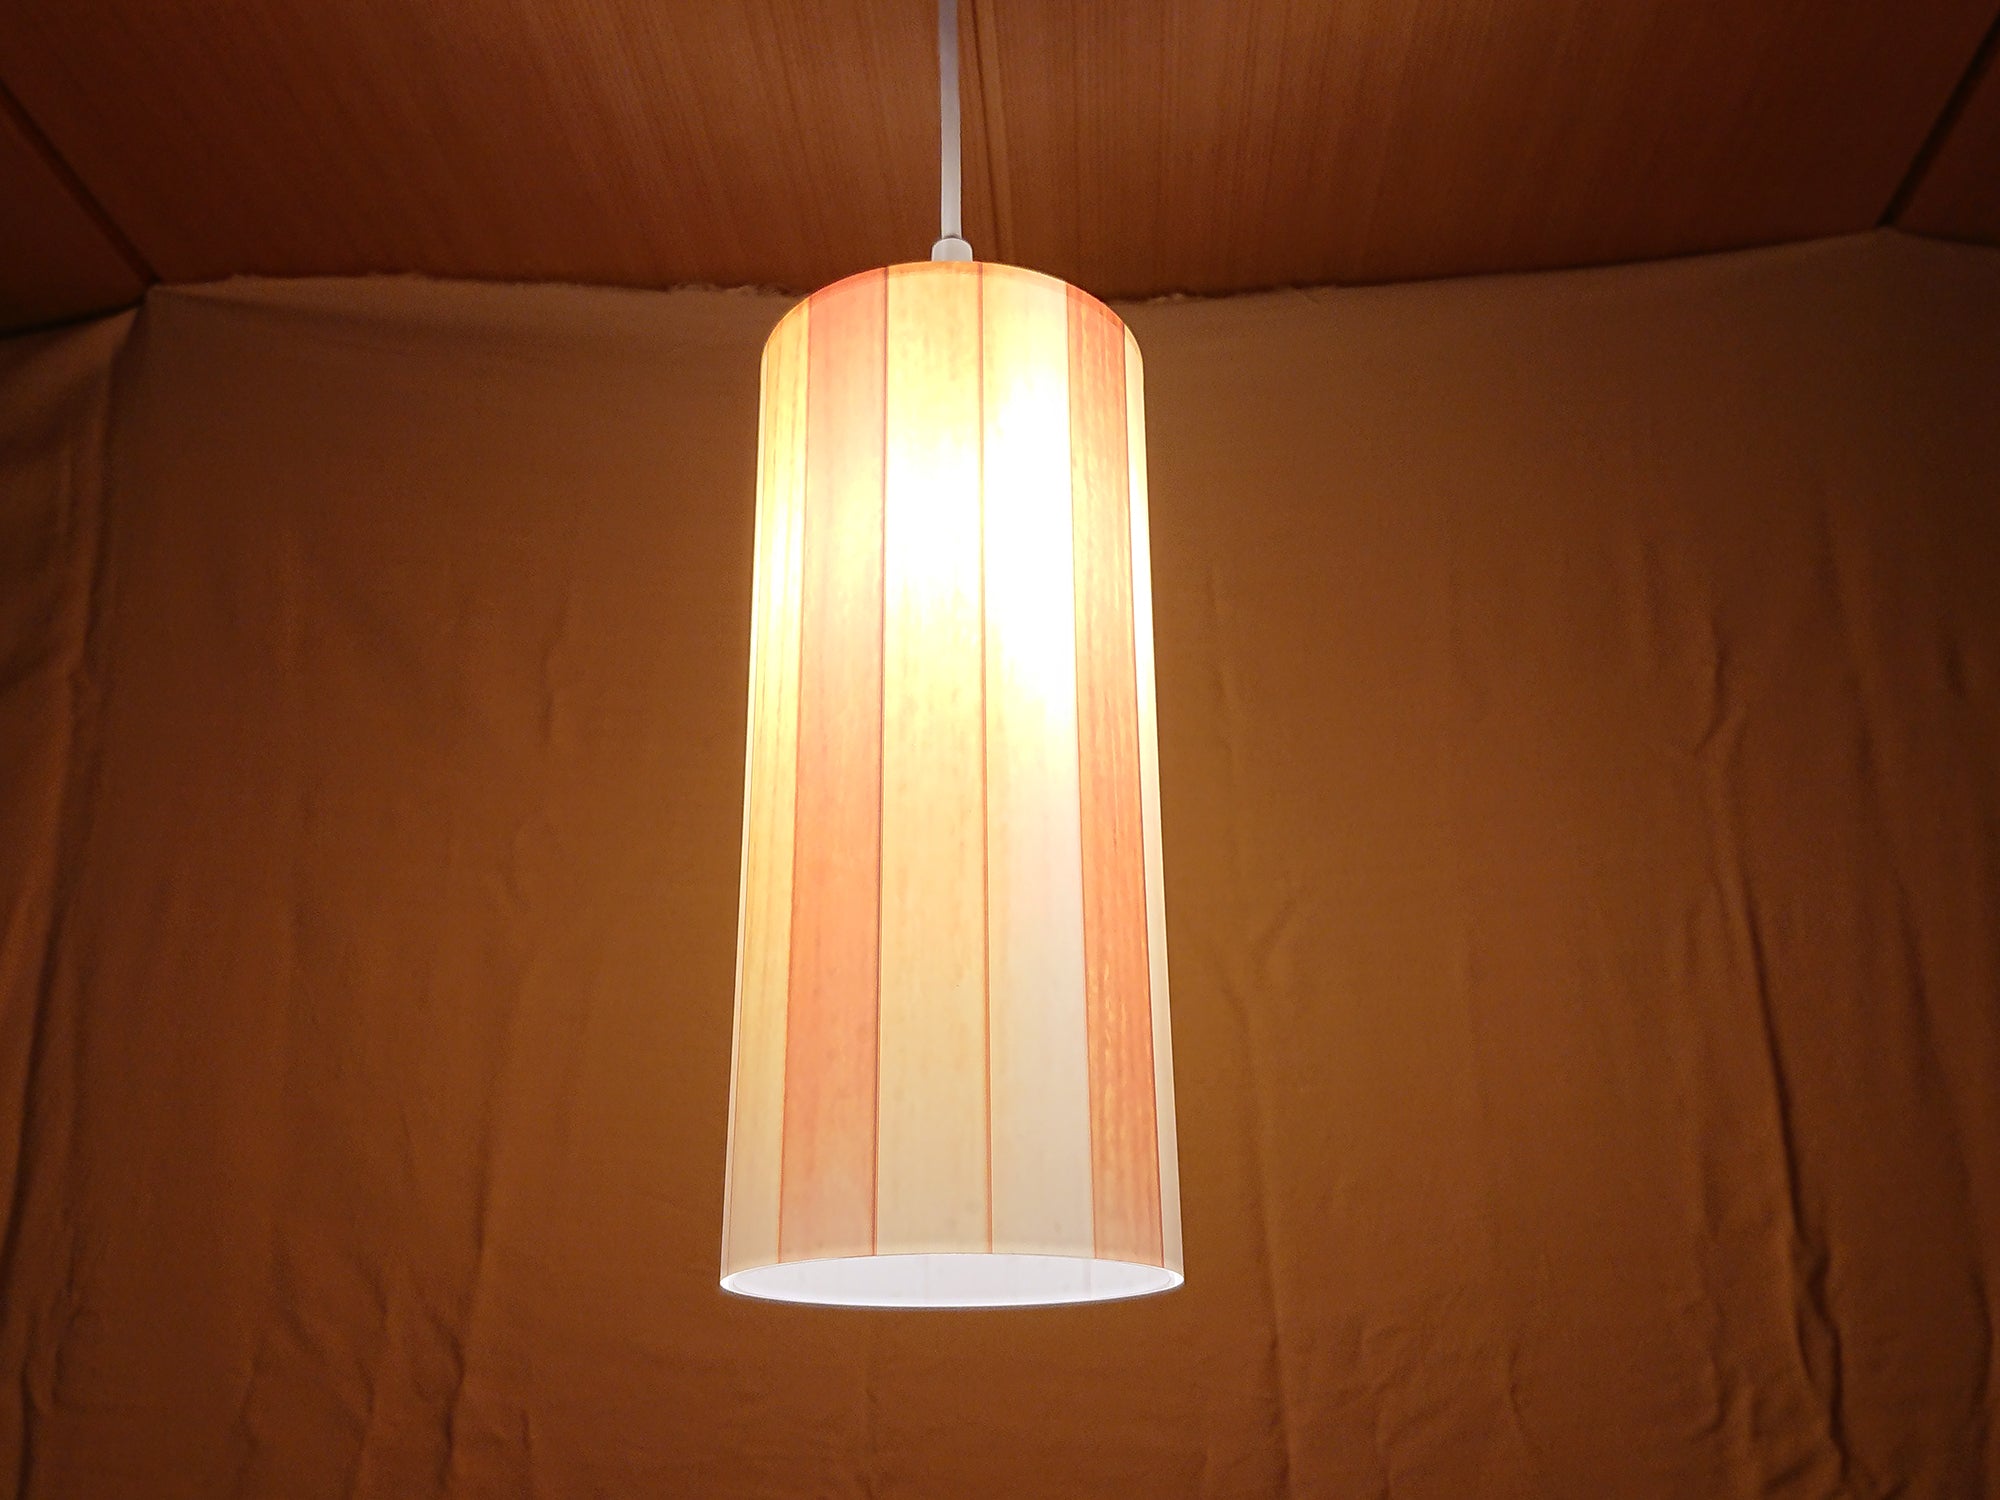 Wood grain pattern 3 illuminated print lampshade